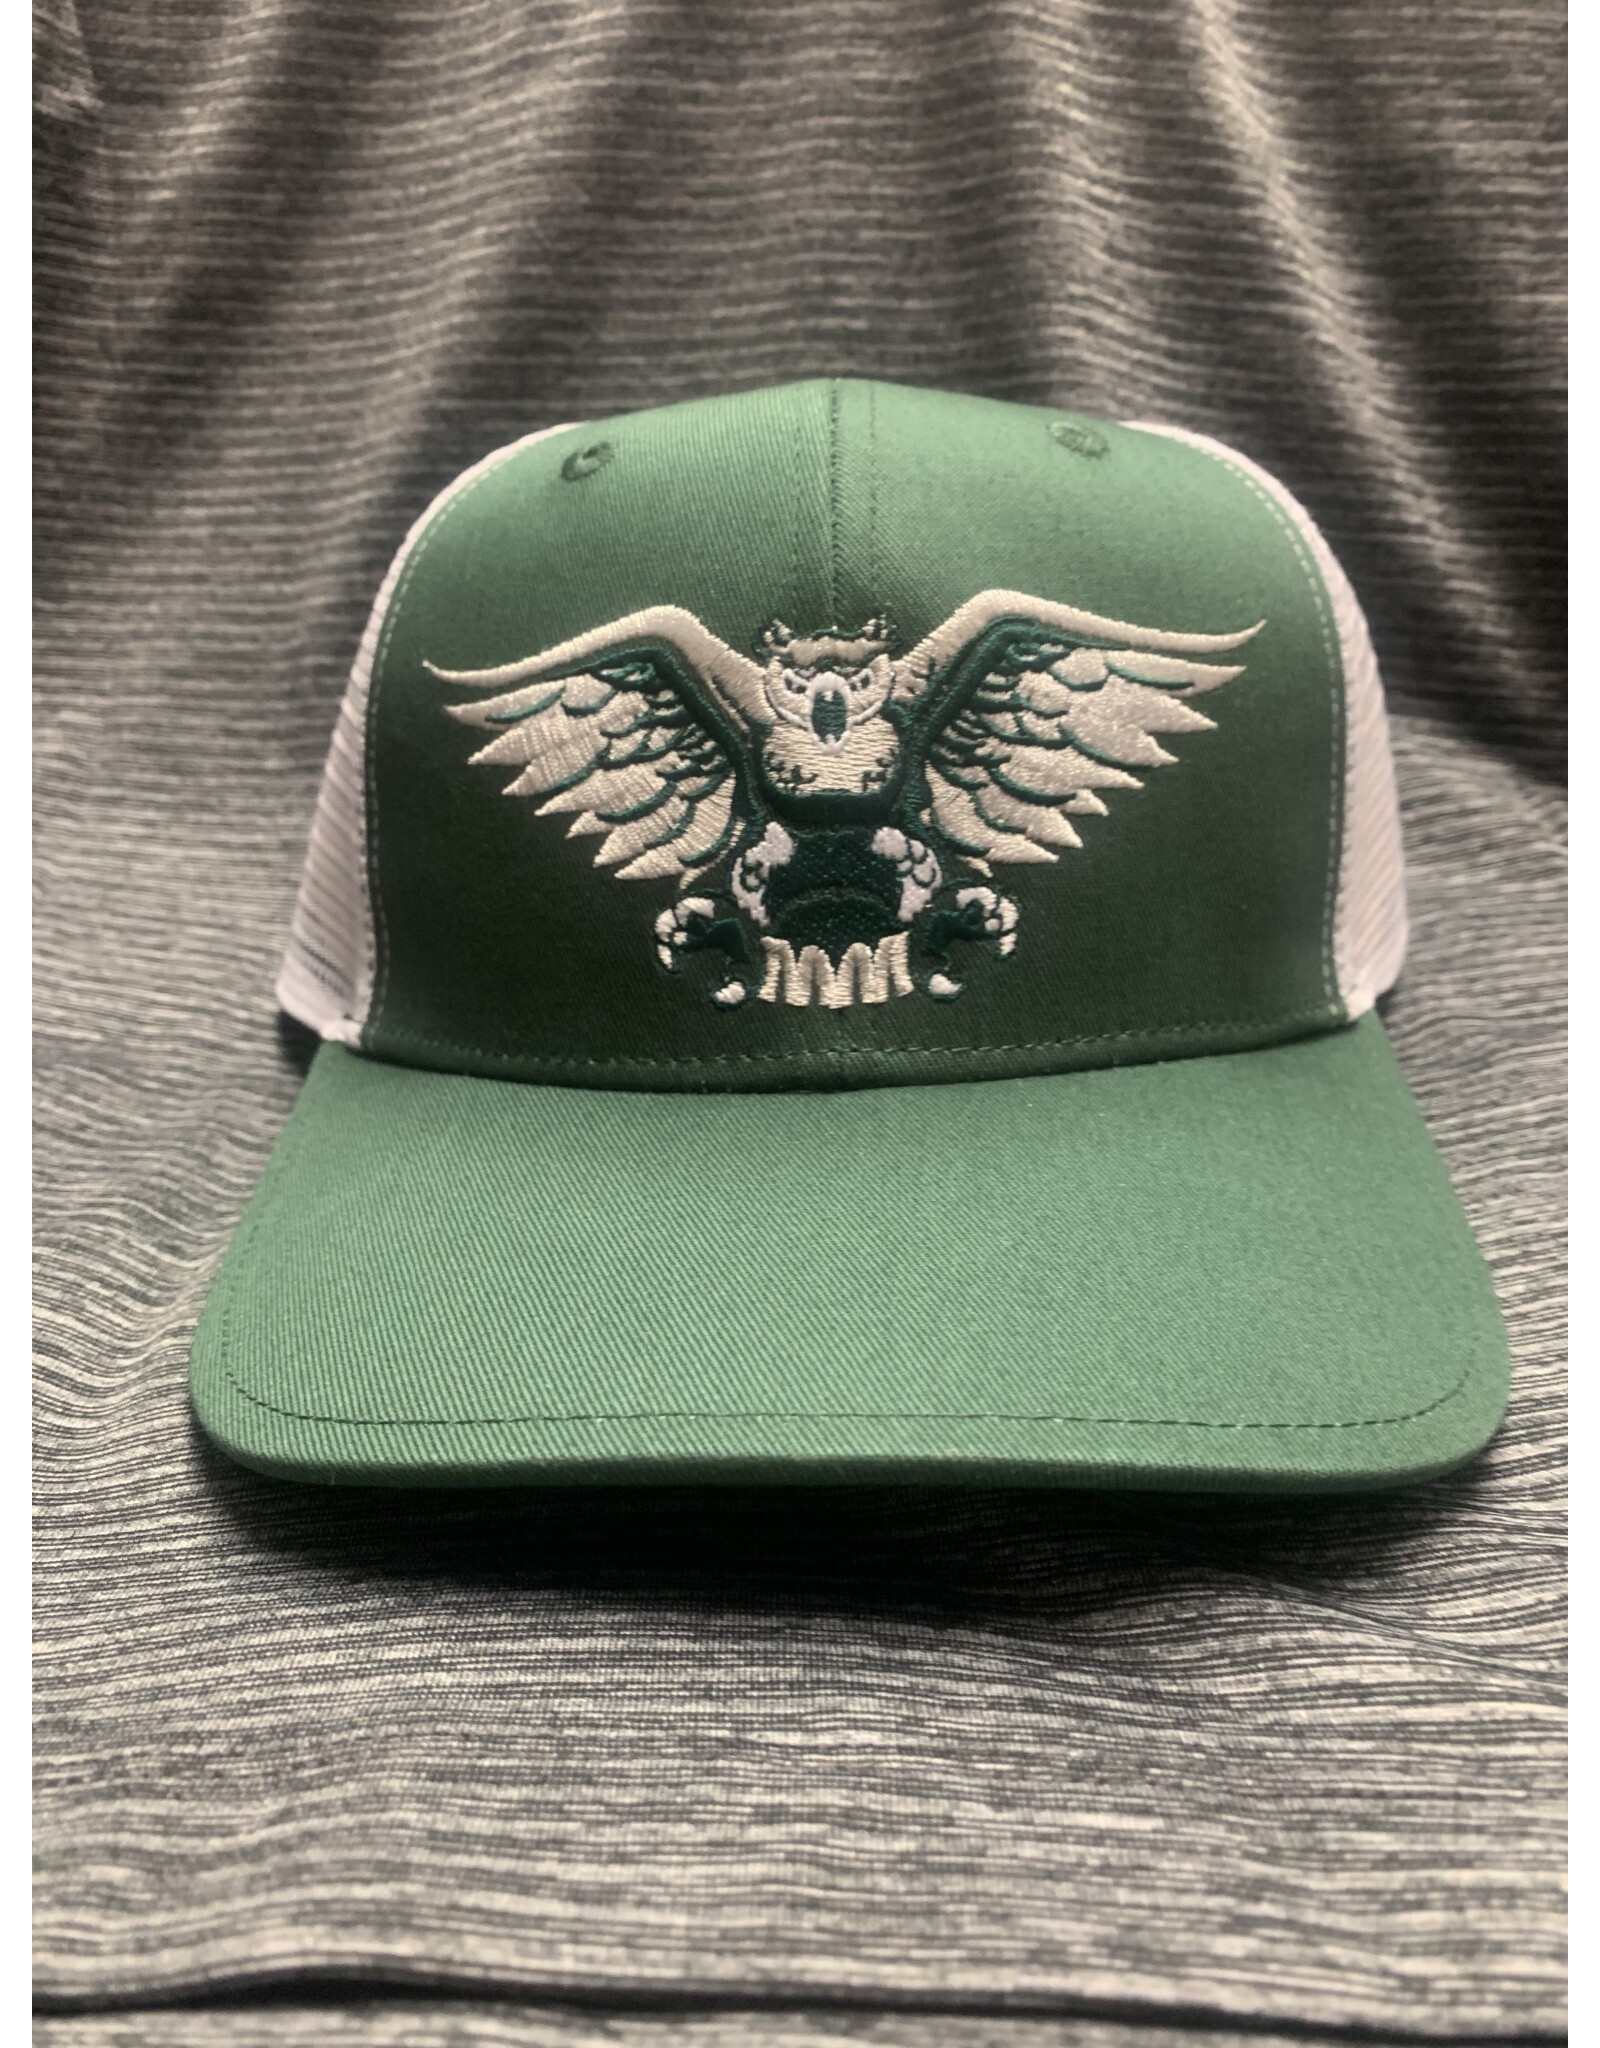 2023 Green/white trucker hat with mascot